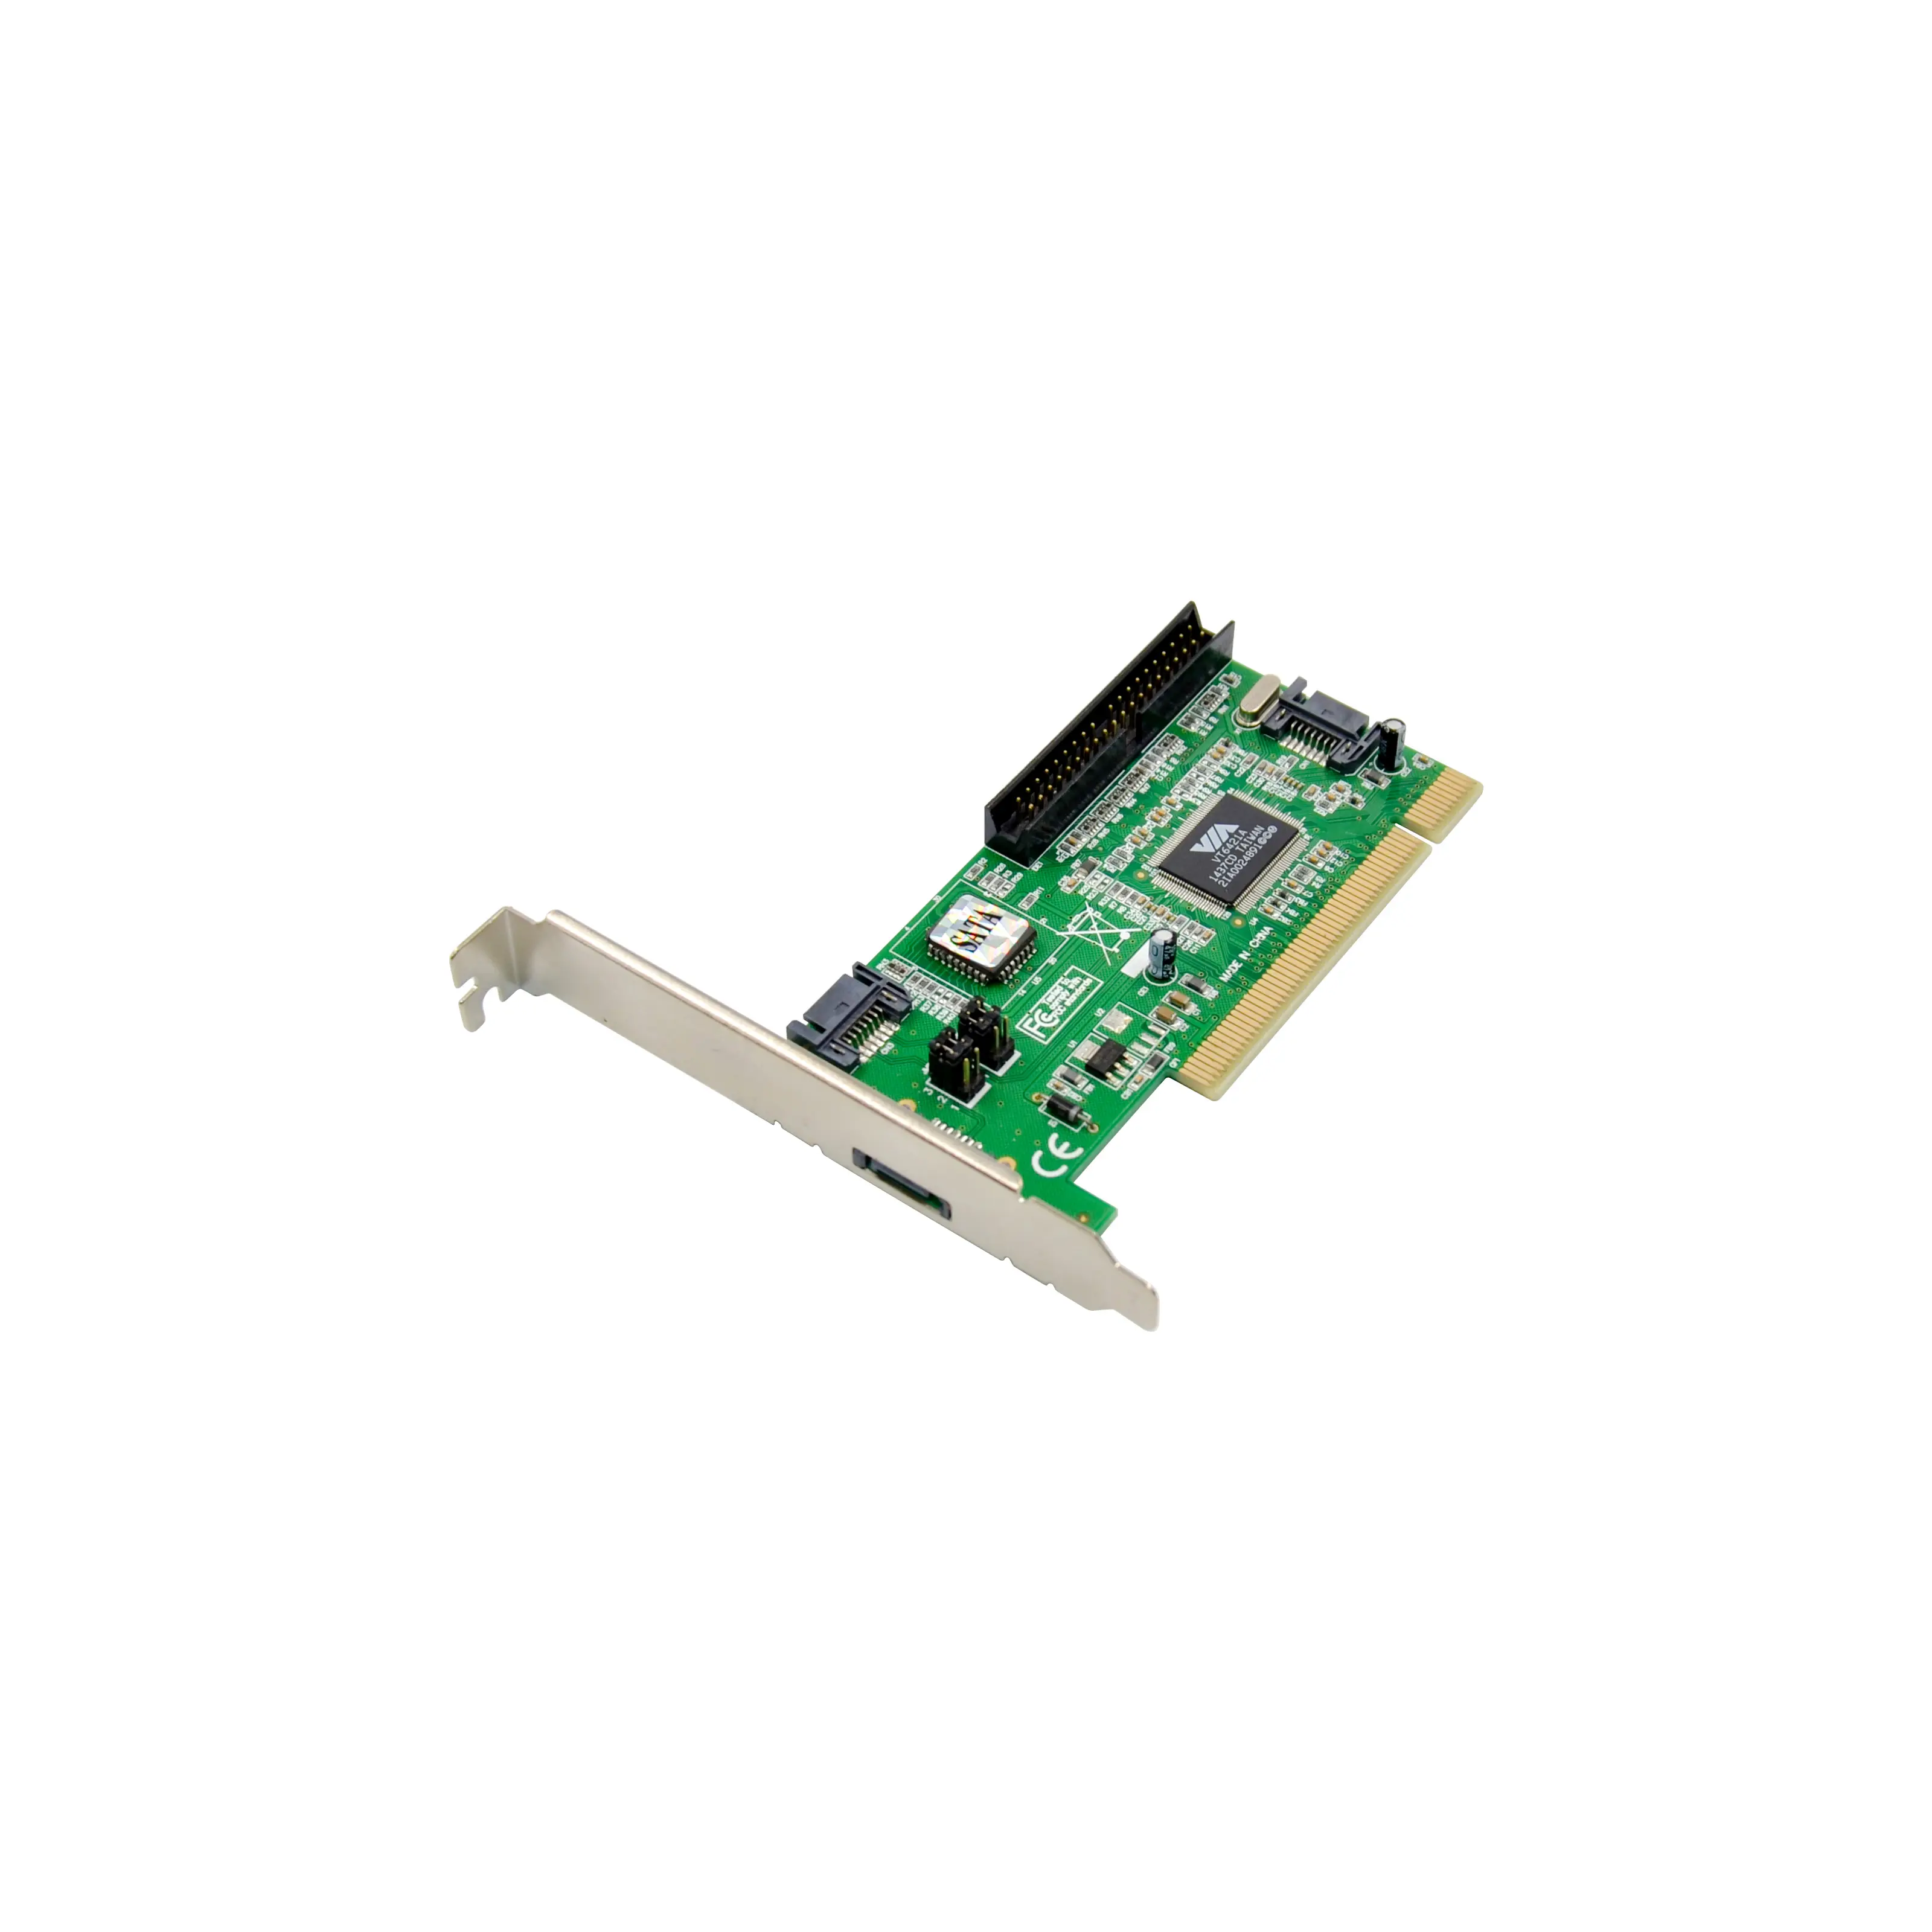 Sunweit ST515 VIA VT6421A 3-Port SATA Raid & IDE Controller PCI Card PCI SATA IDE